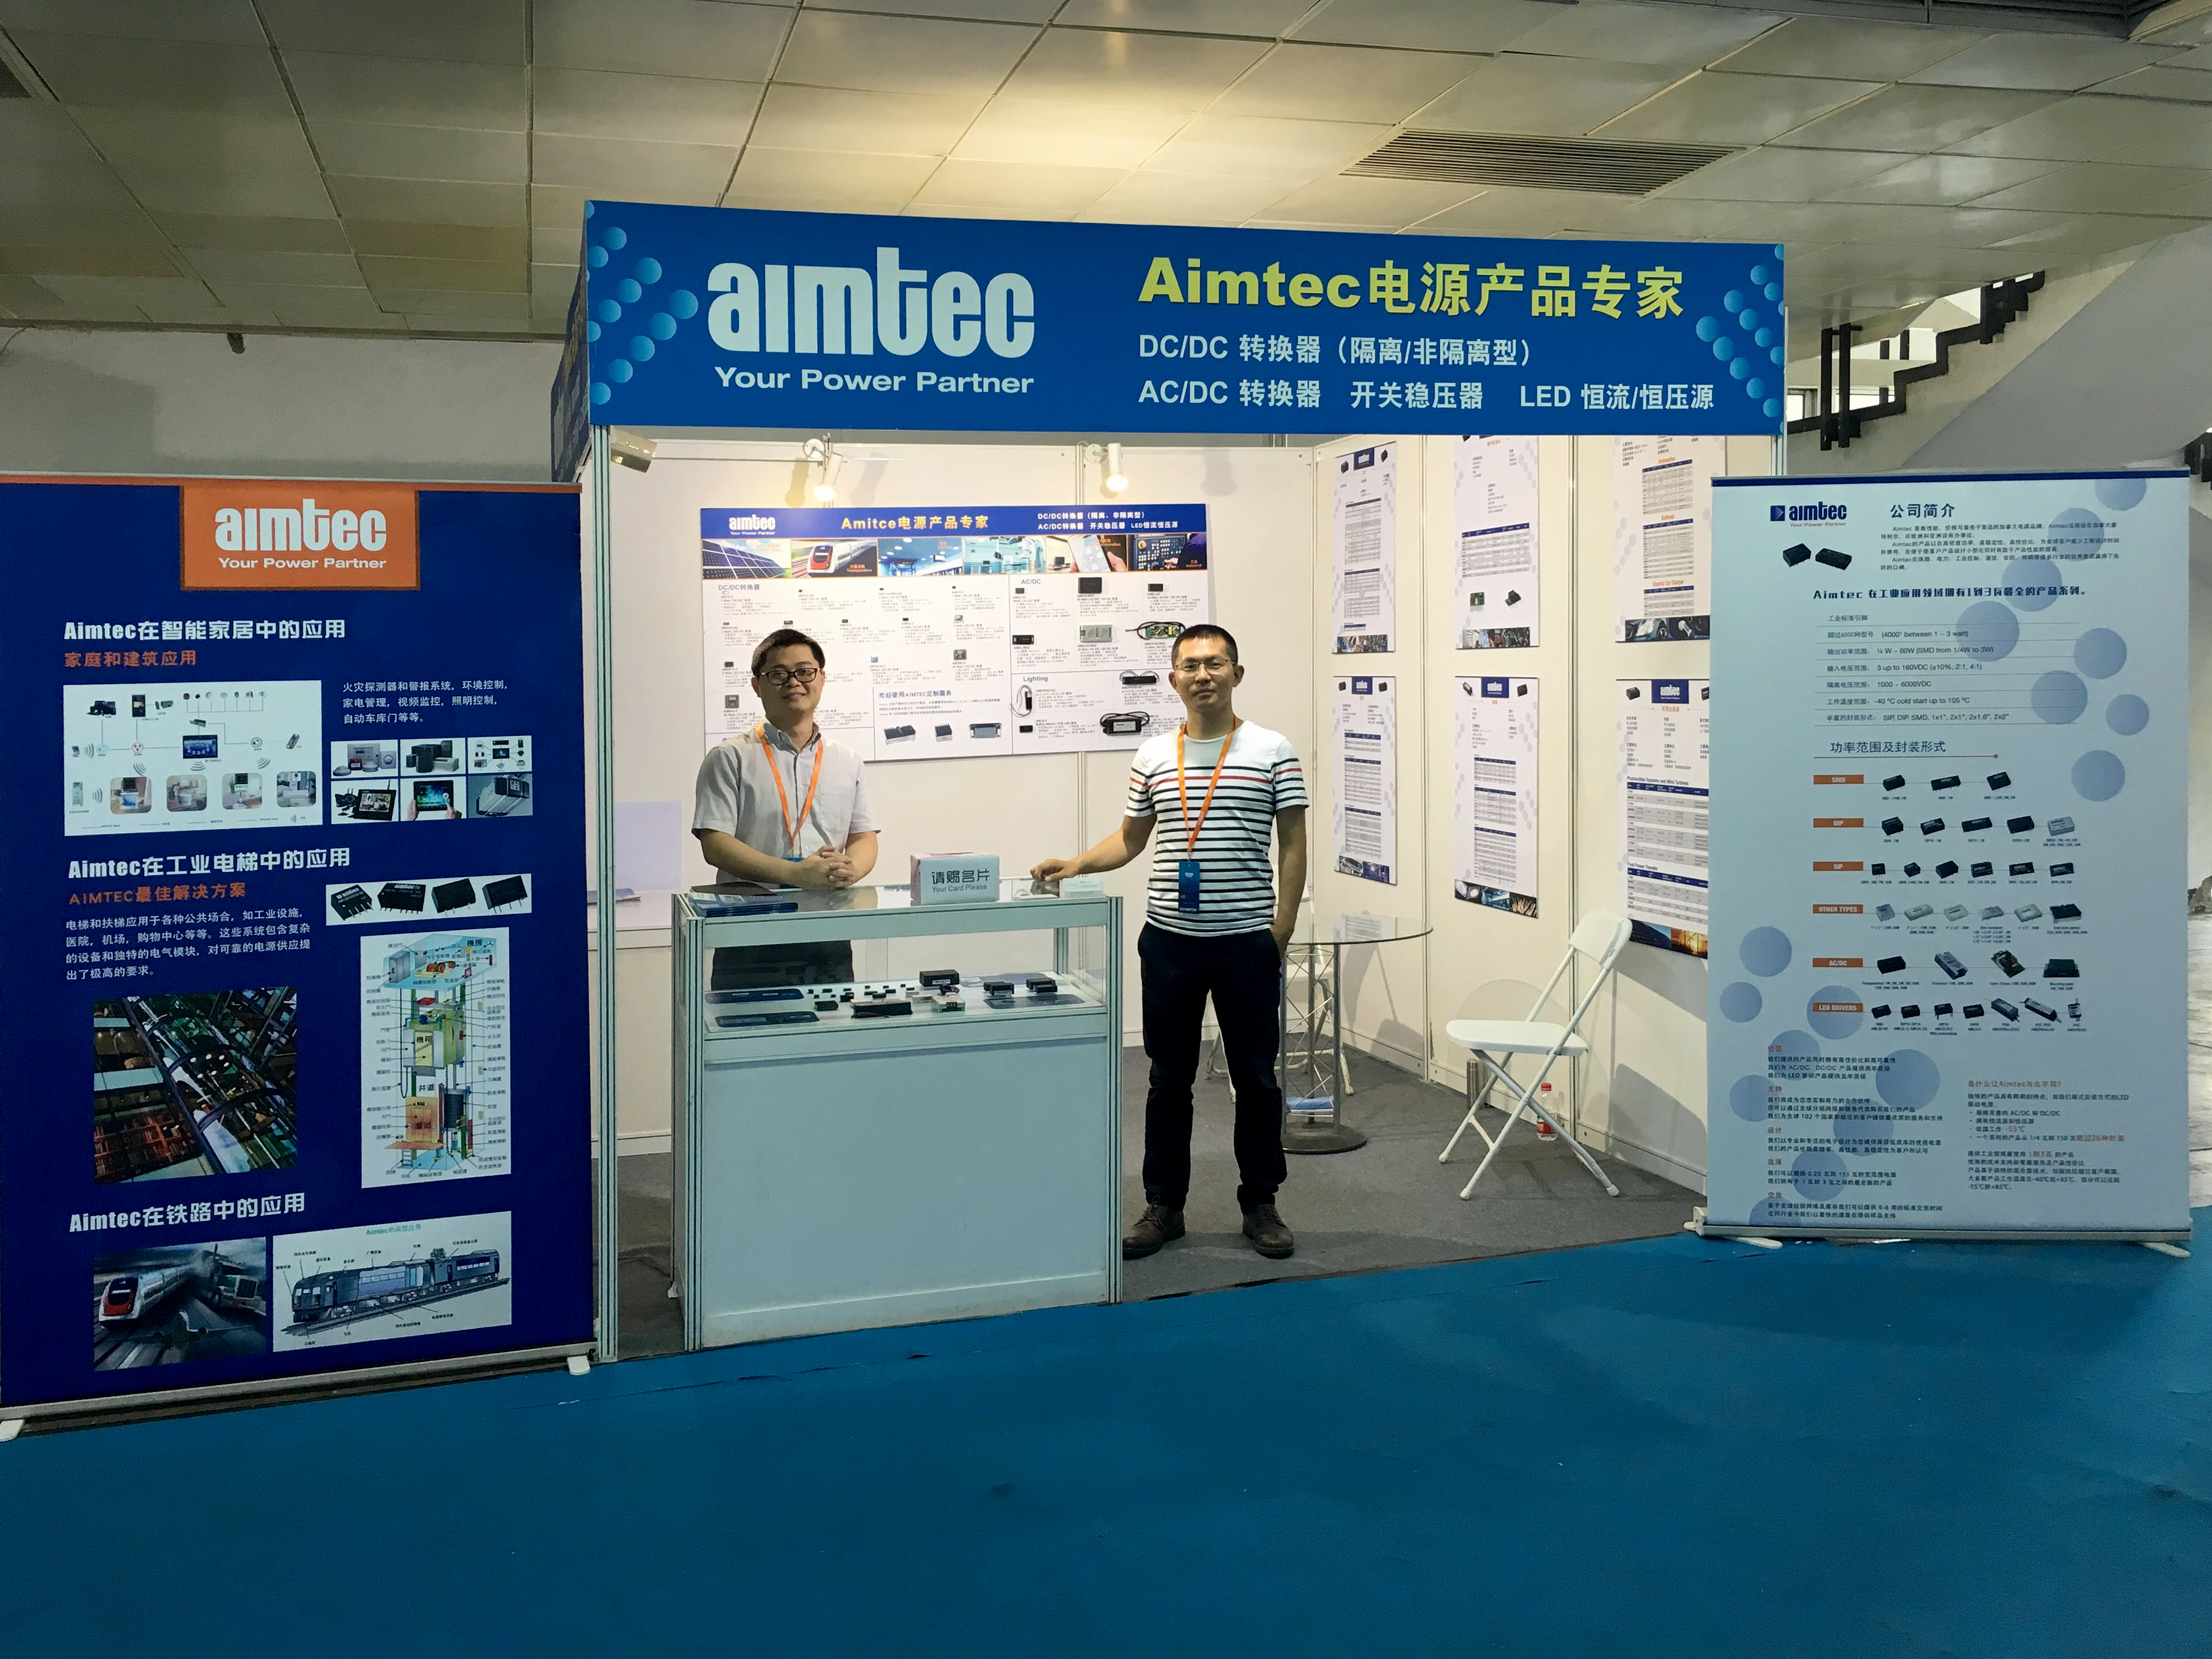 Aimtec at Beijing's Rail Transportation Exhibition